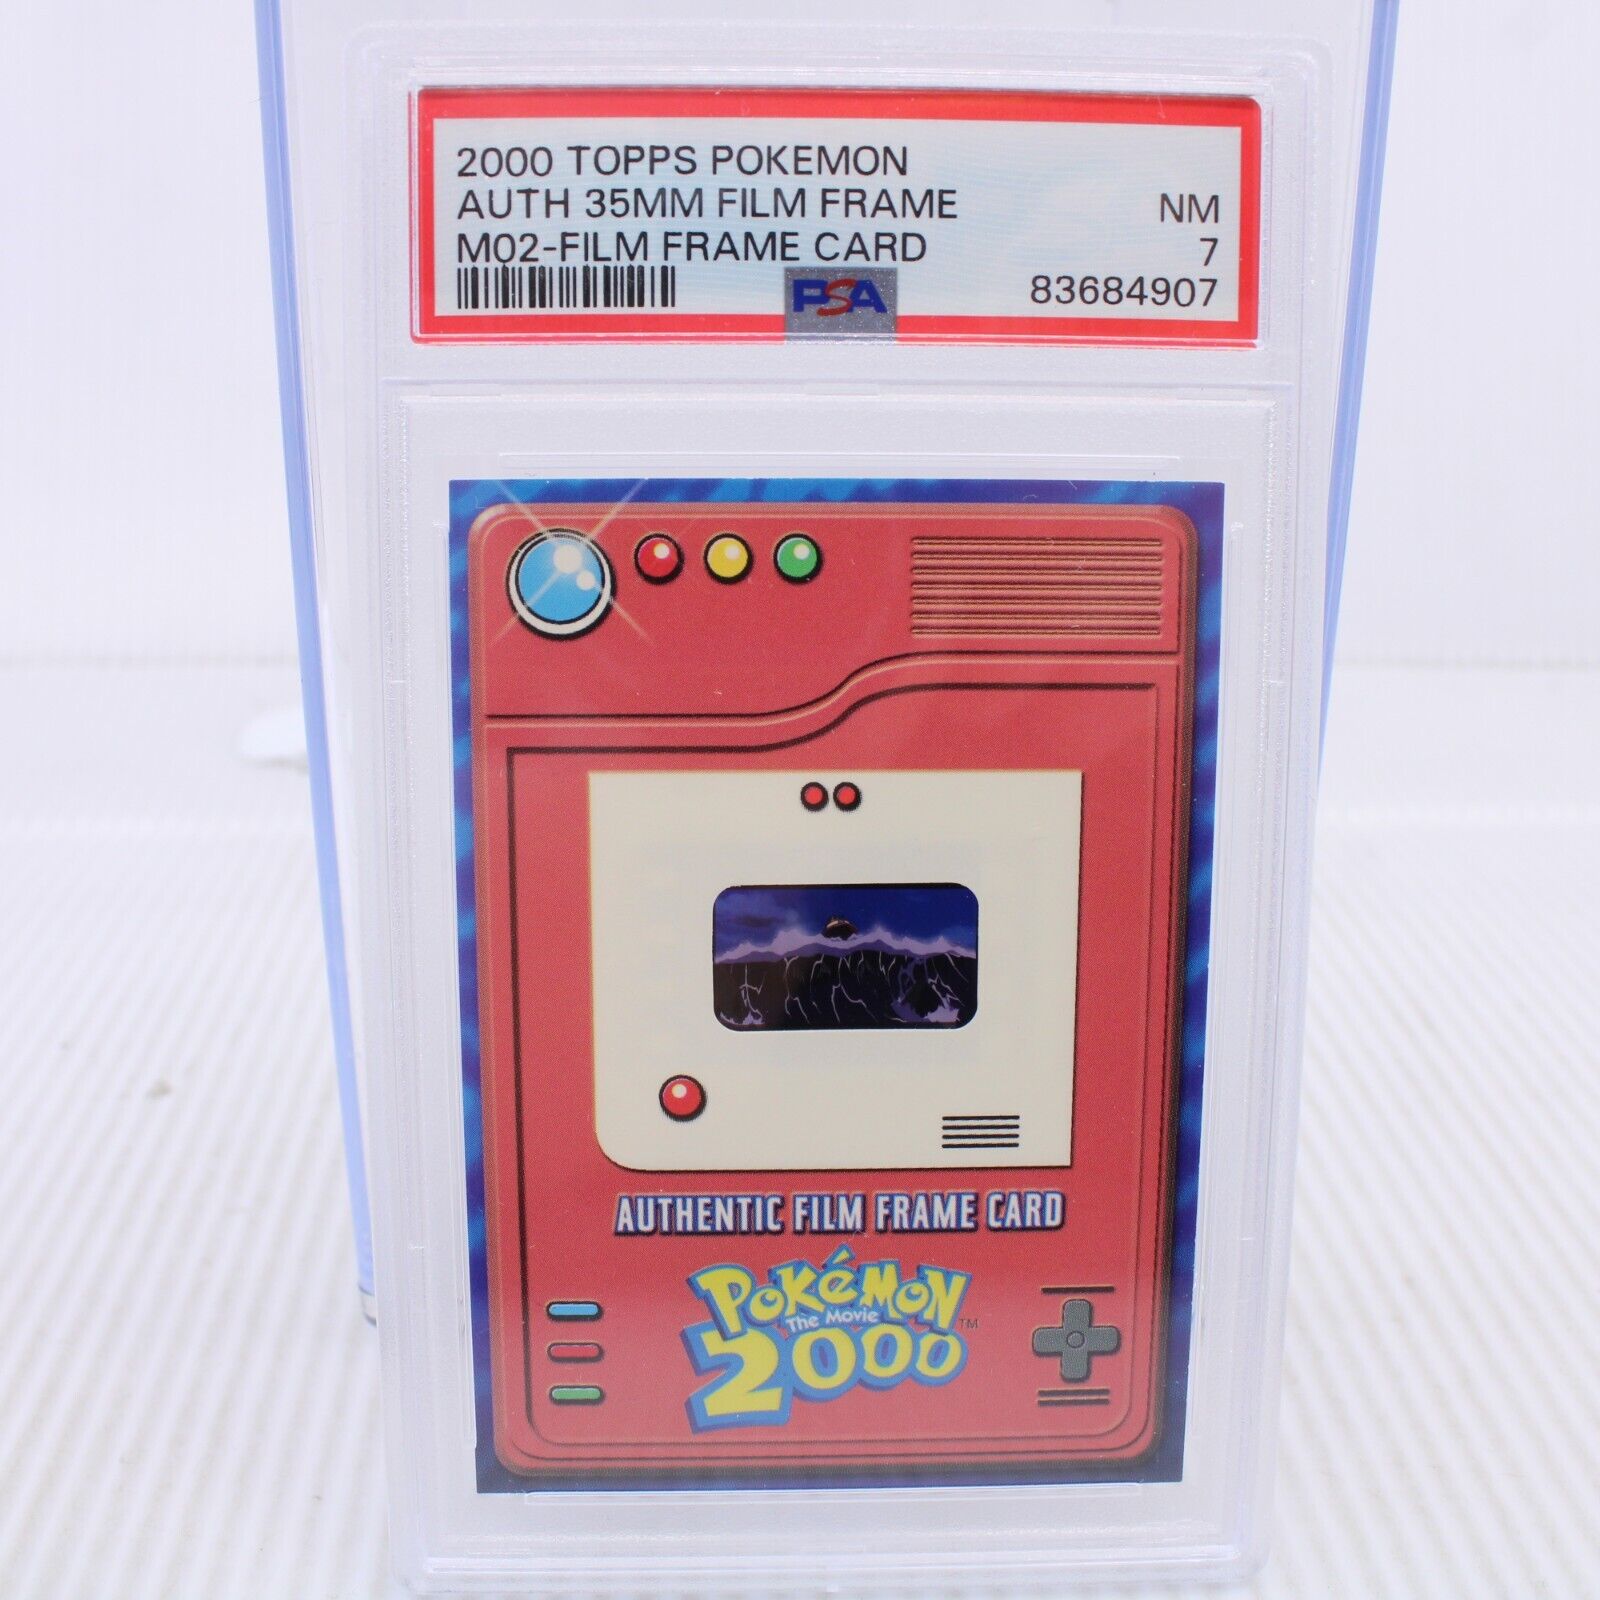 A6 Topps Pokemon Auth 35MM Film Frame Card NM PSA 7